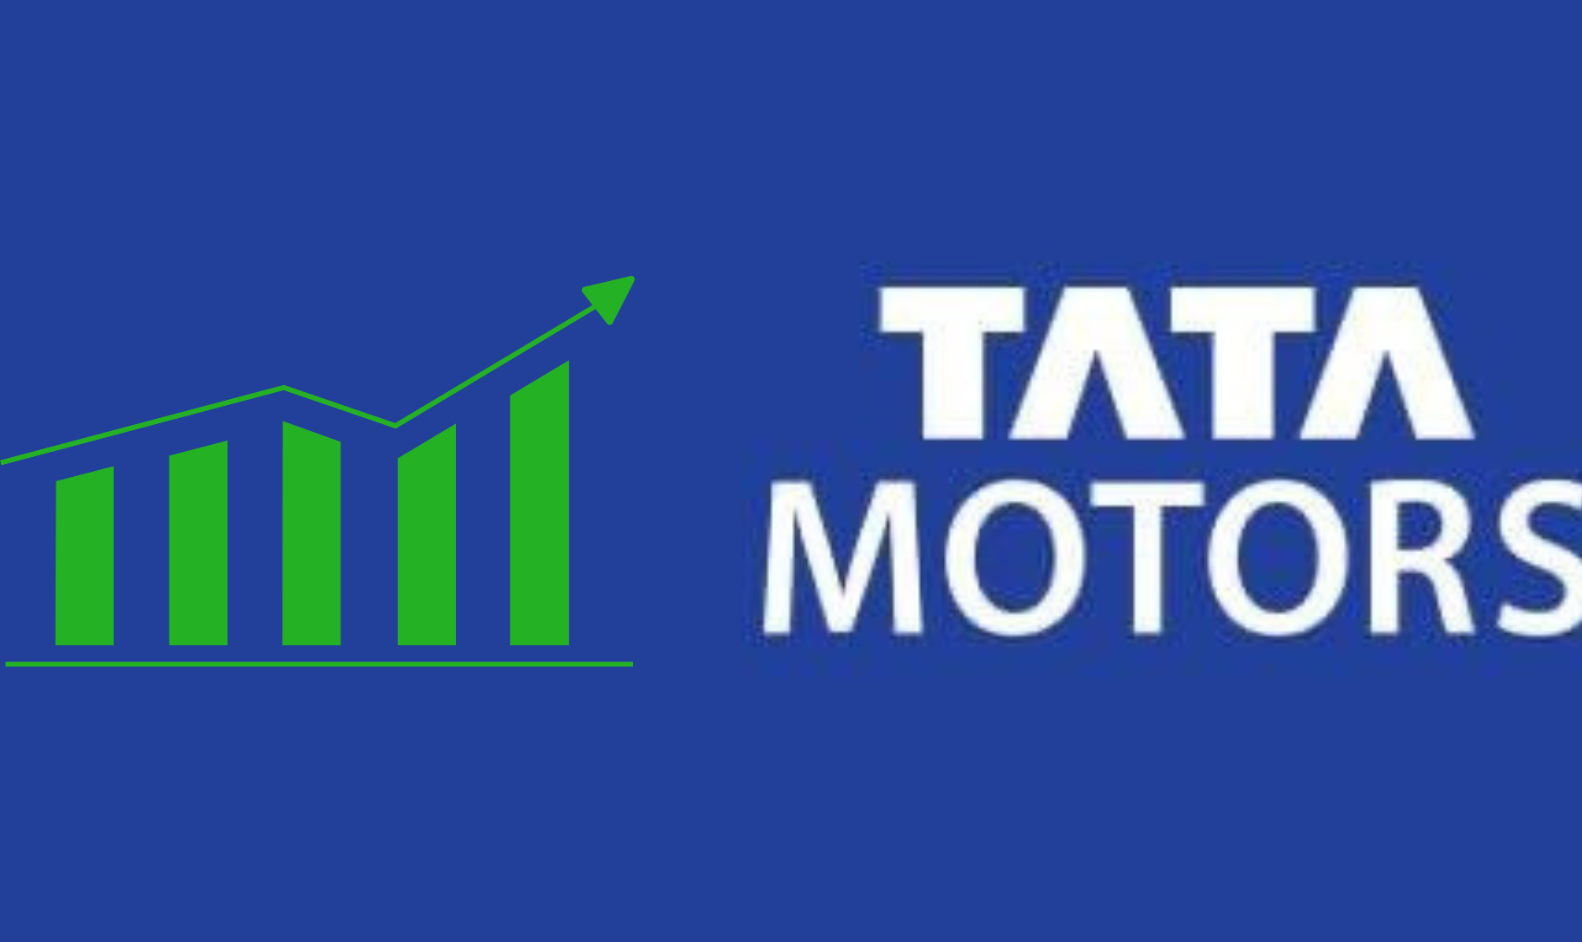 Tata Motors Q3 Result: Tata Motors reports massive Rs 26,961 crore Q3 loss  on one-time hit from asset impairment at JLR